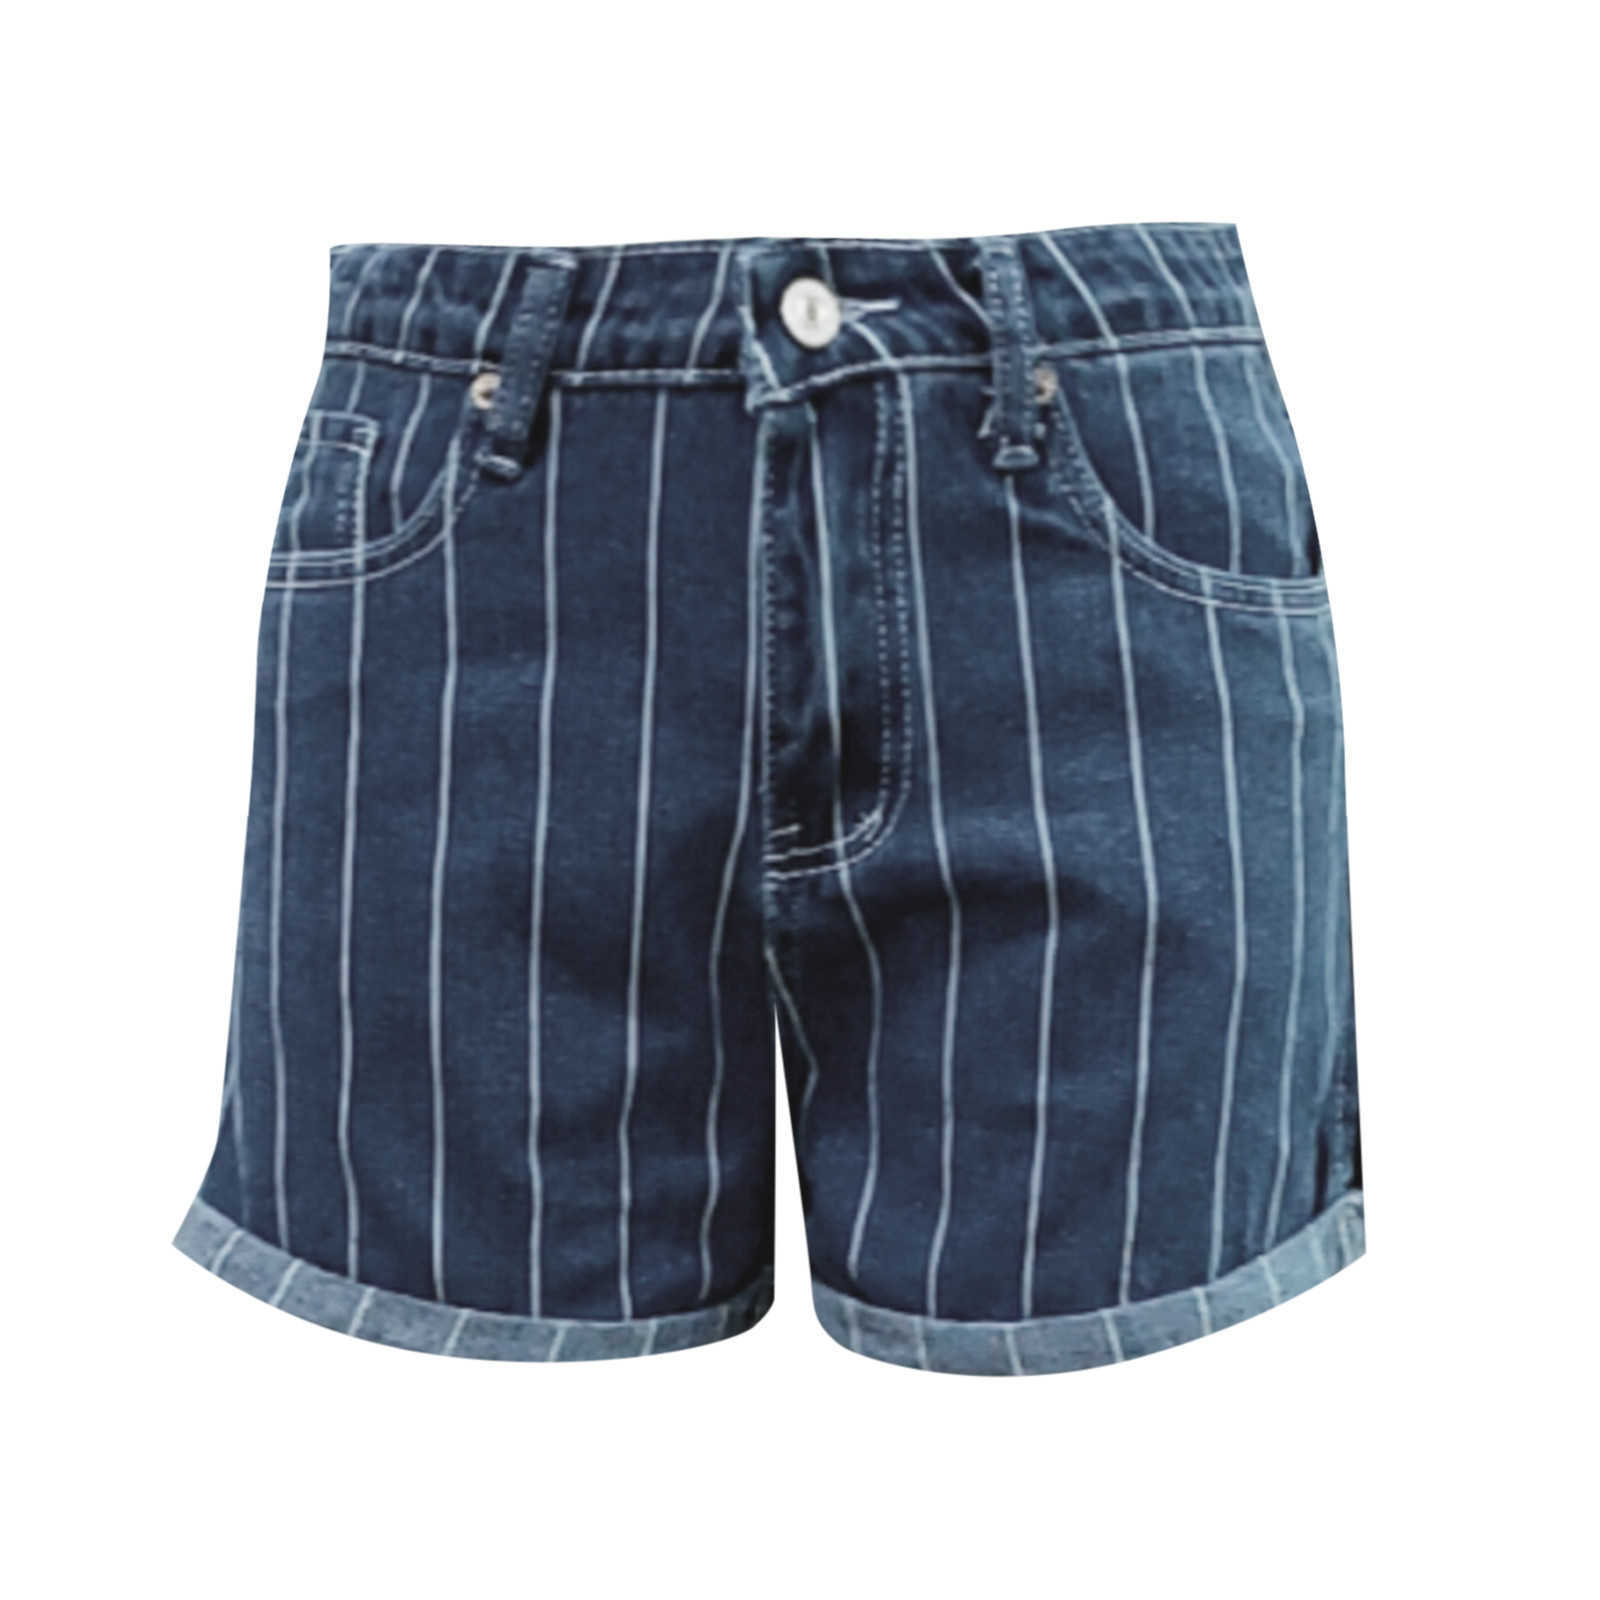 Brooken Style Denim Summer Women's Short Legged Long Sexy Jeans Pantalones cortos perforados de cintura alta P230606